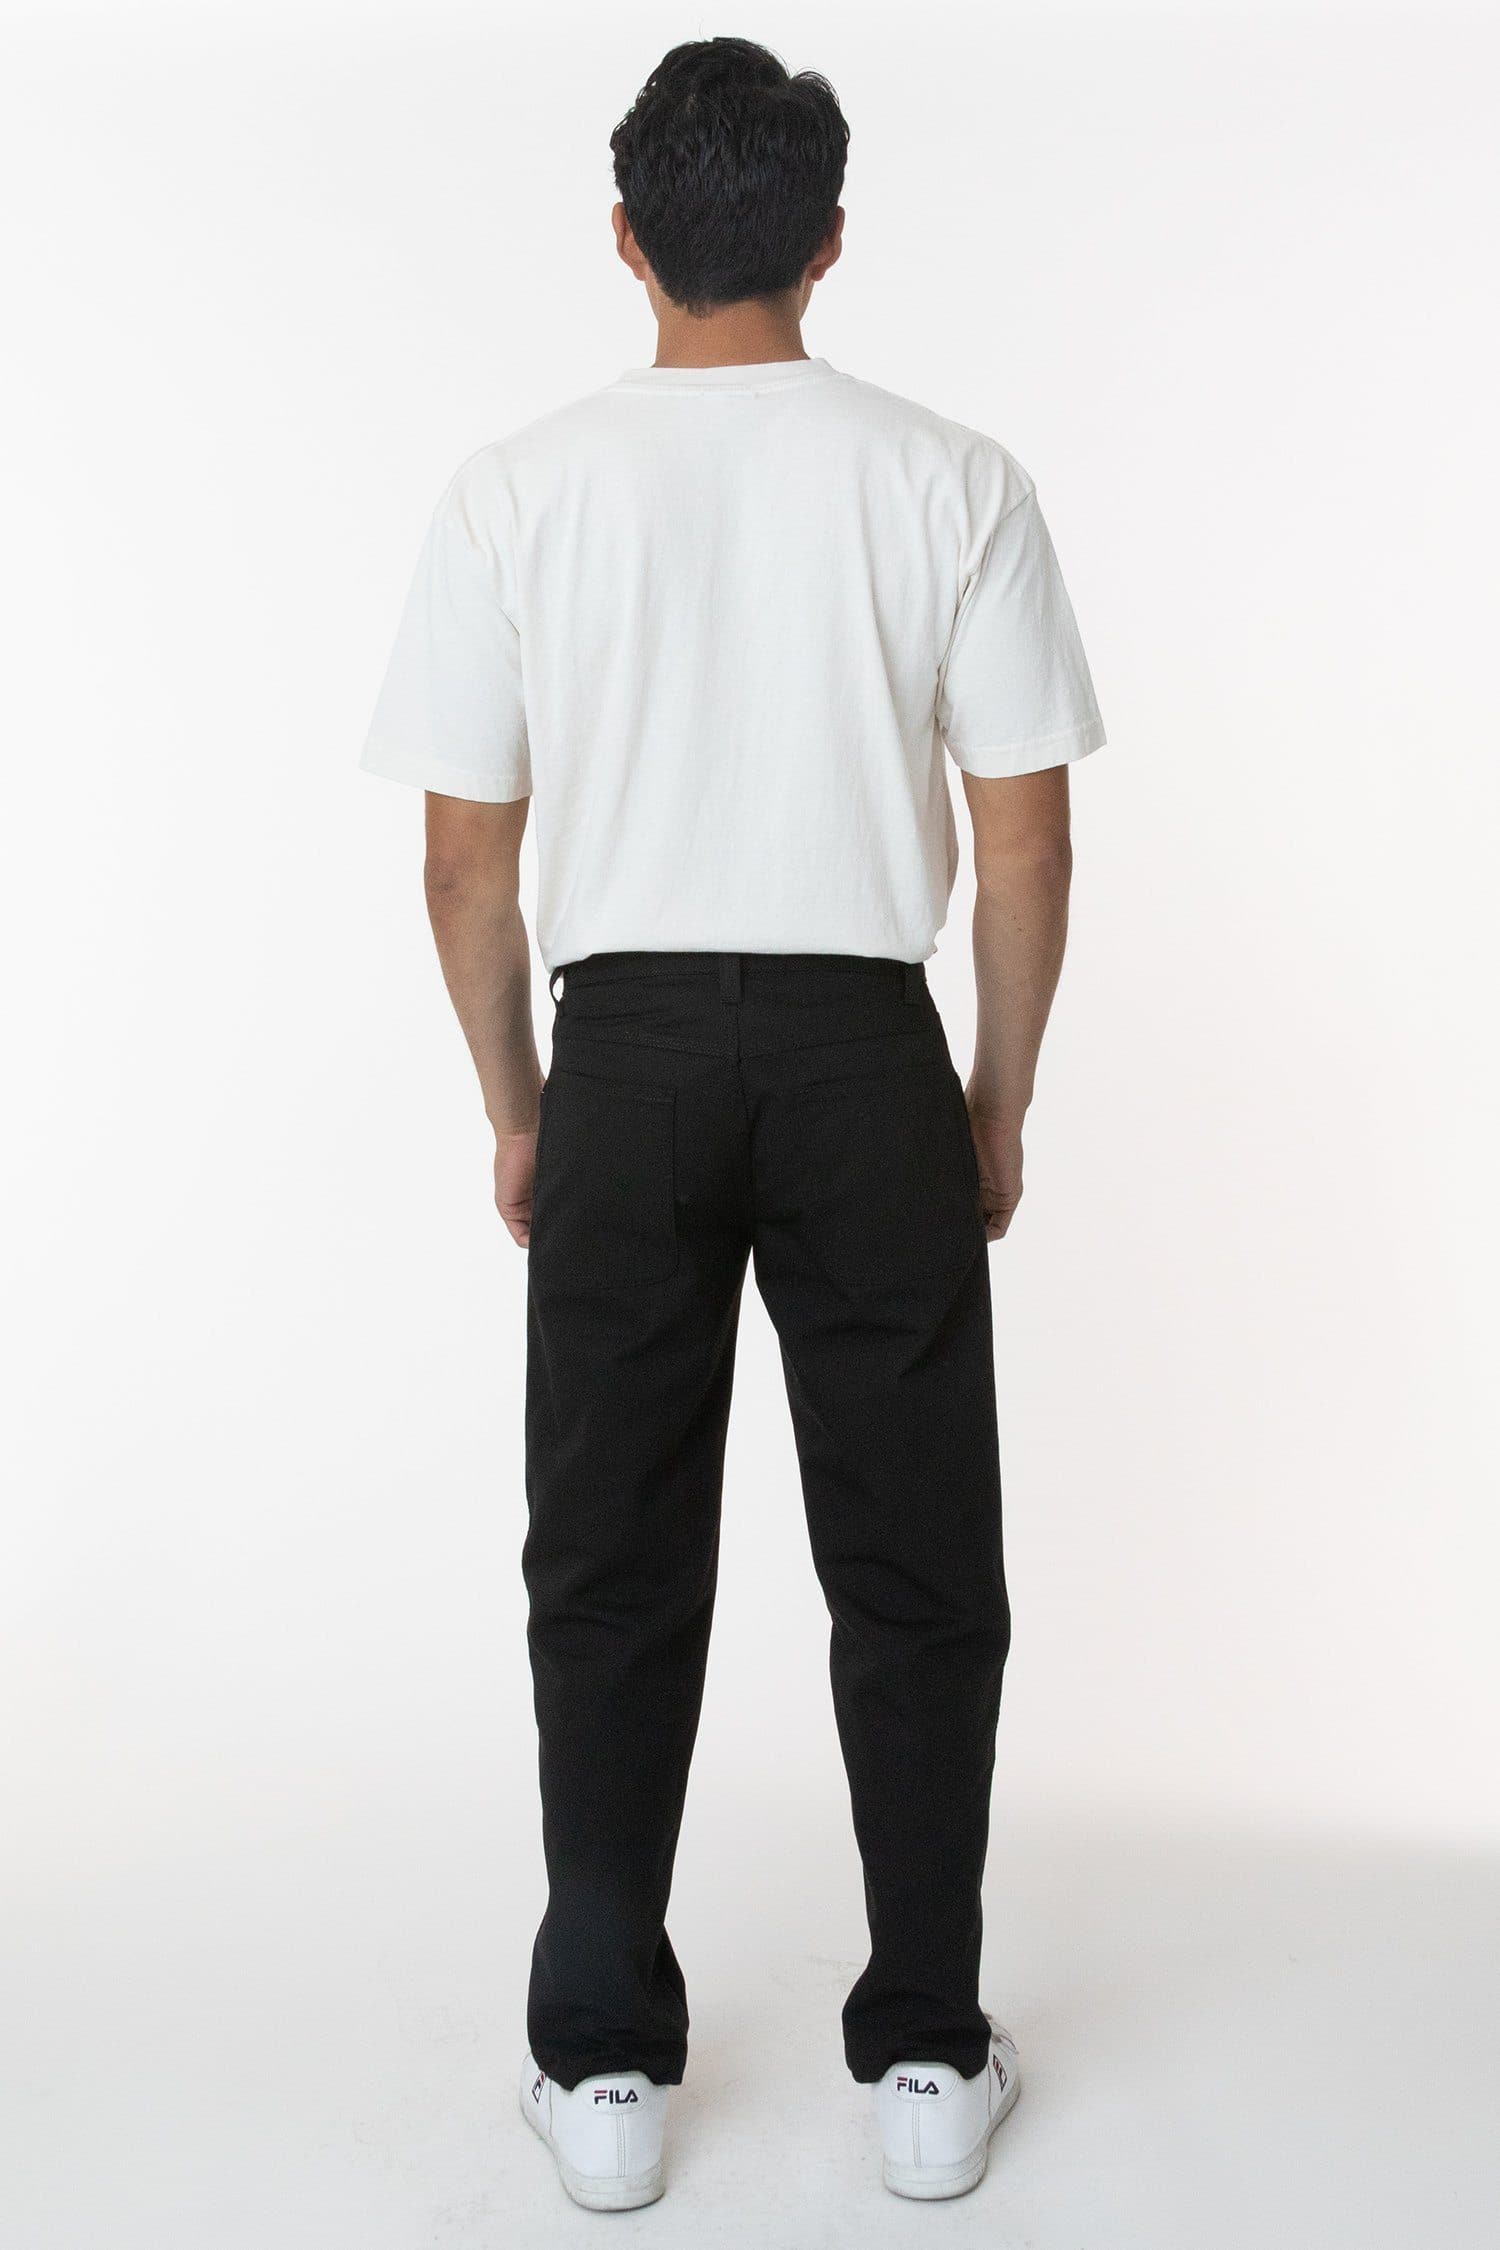 Dickies Men's Black Twill Work Pants (32 X 30) at